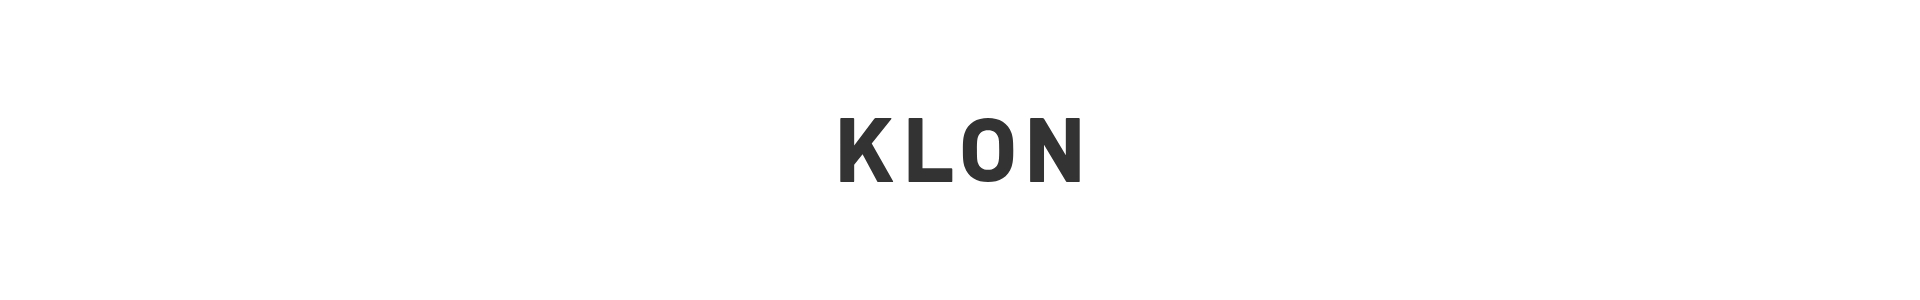 KLON × PARKOURKLON × PARKOUR～デザイン制作事例1